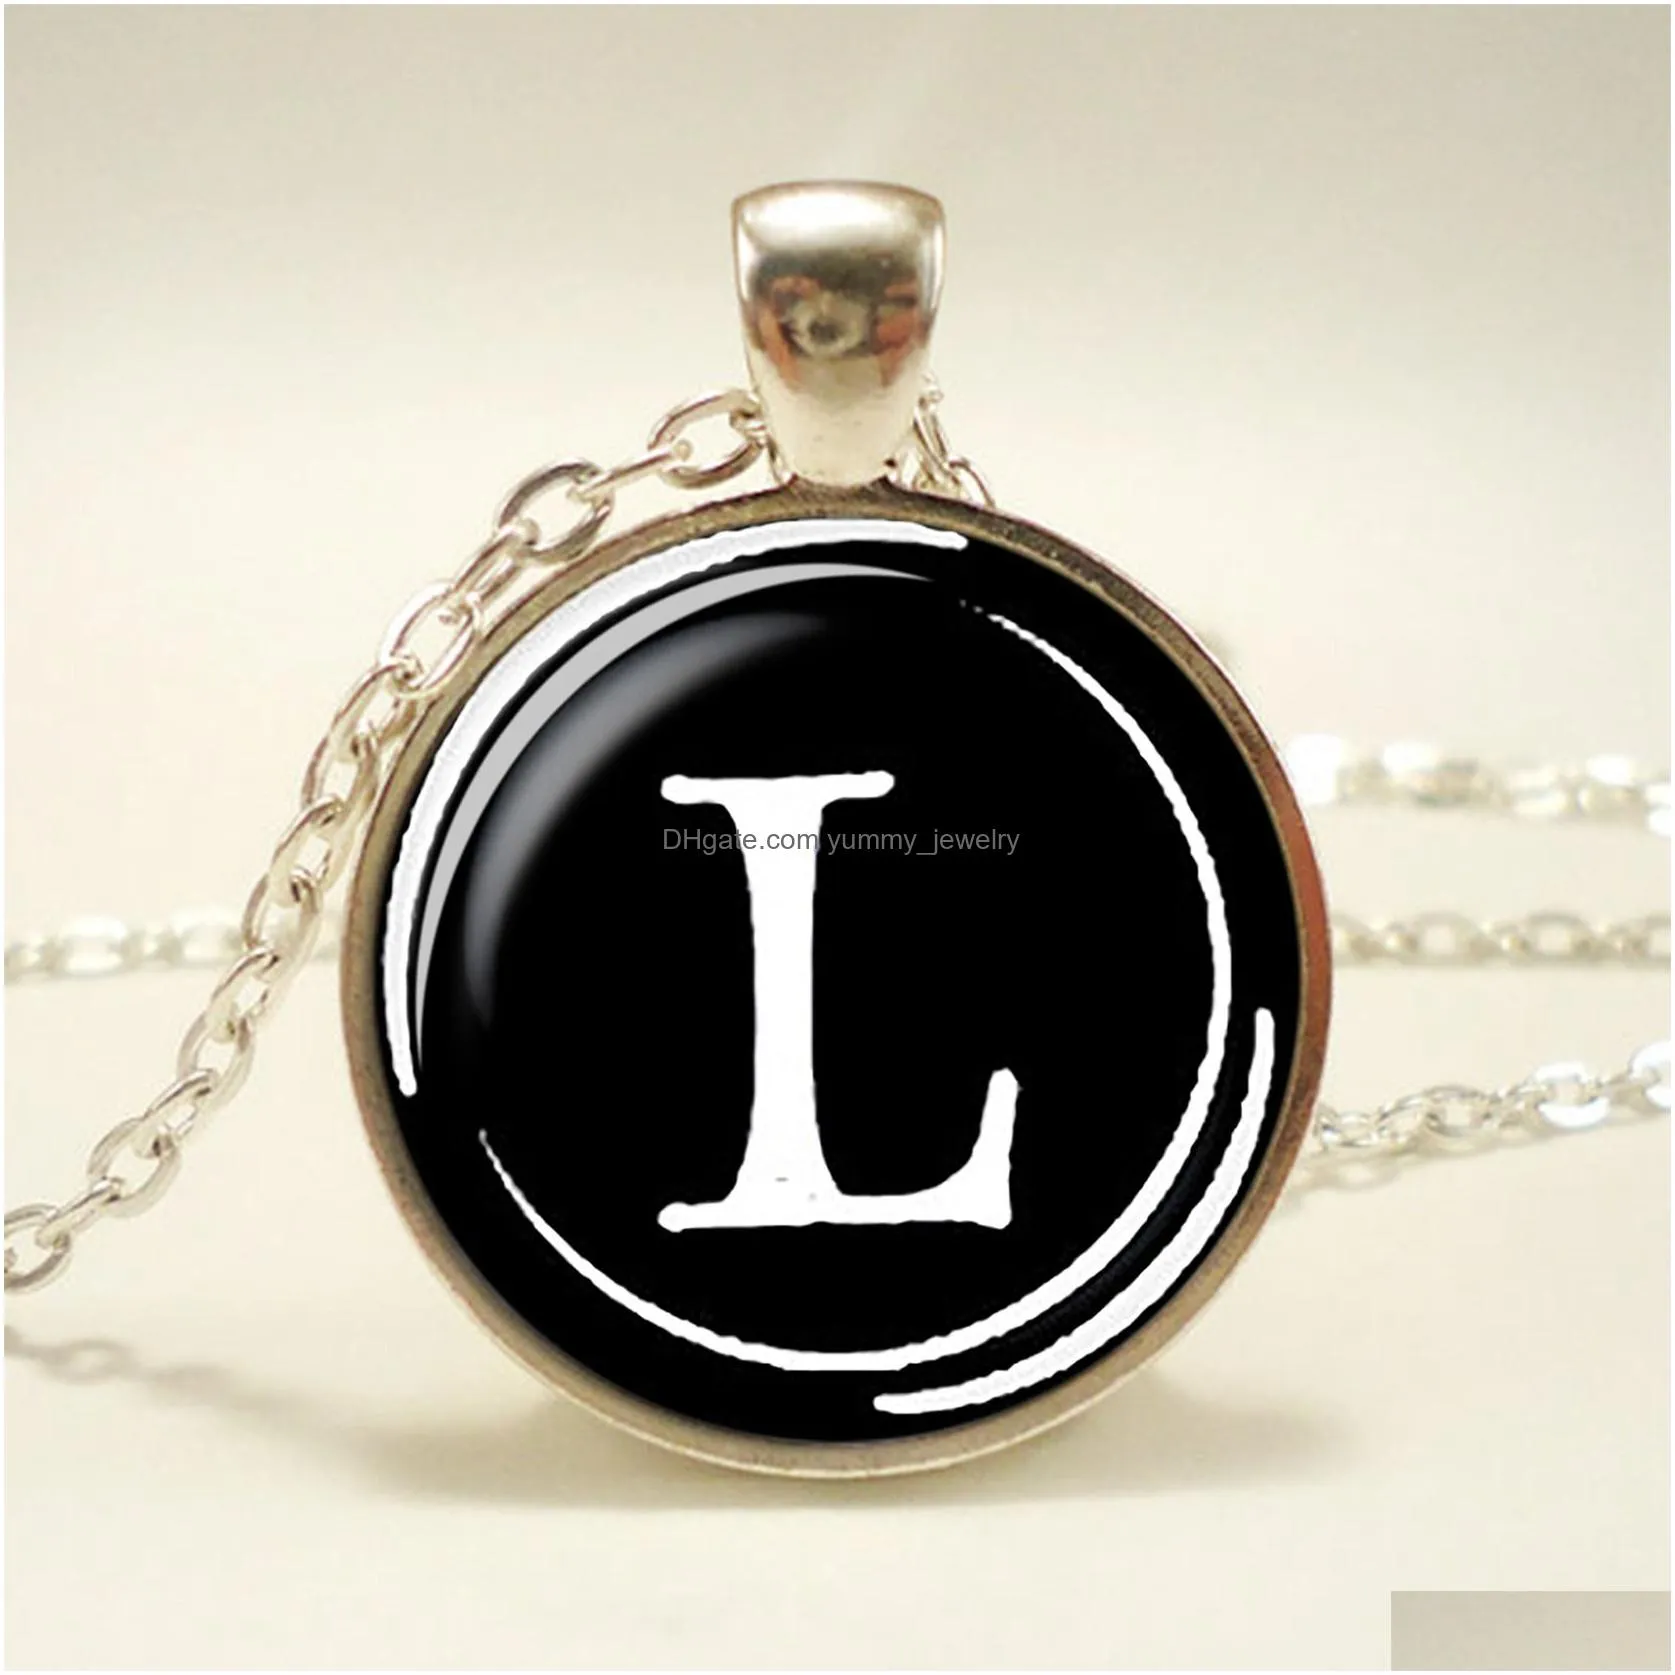 26 letters necklace alphabets glass cabochon pendant silver color chain necklace name initial letters men women fashion jewelry